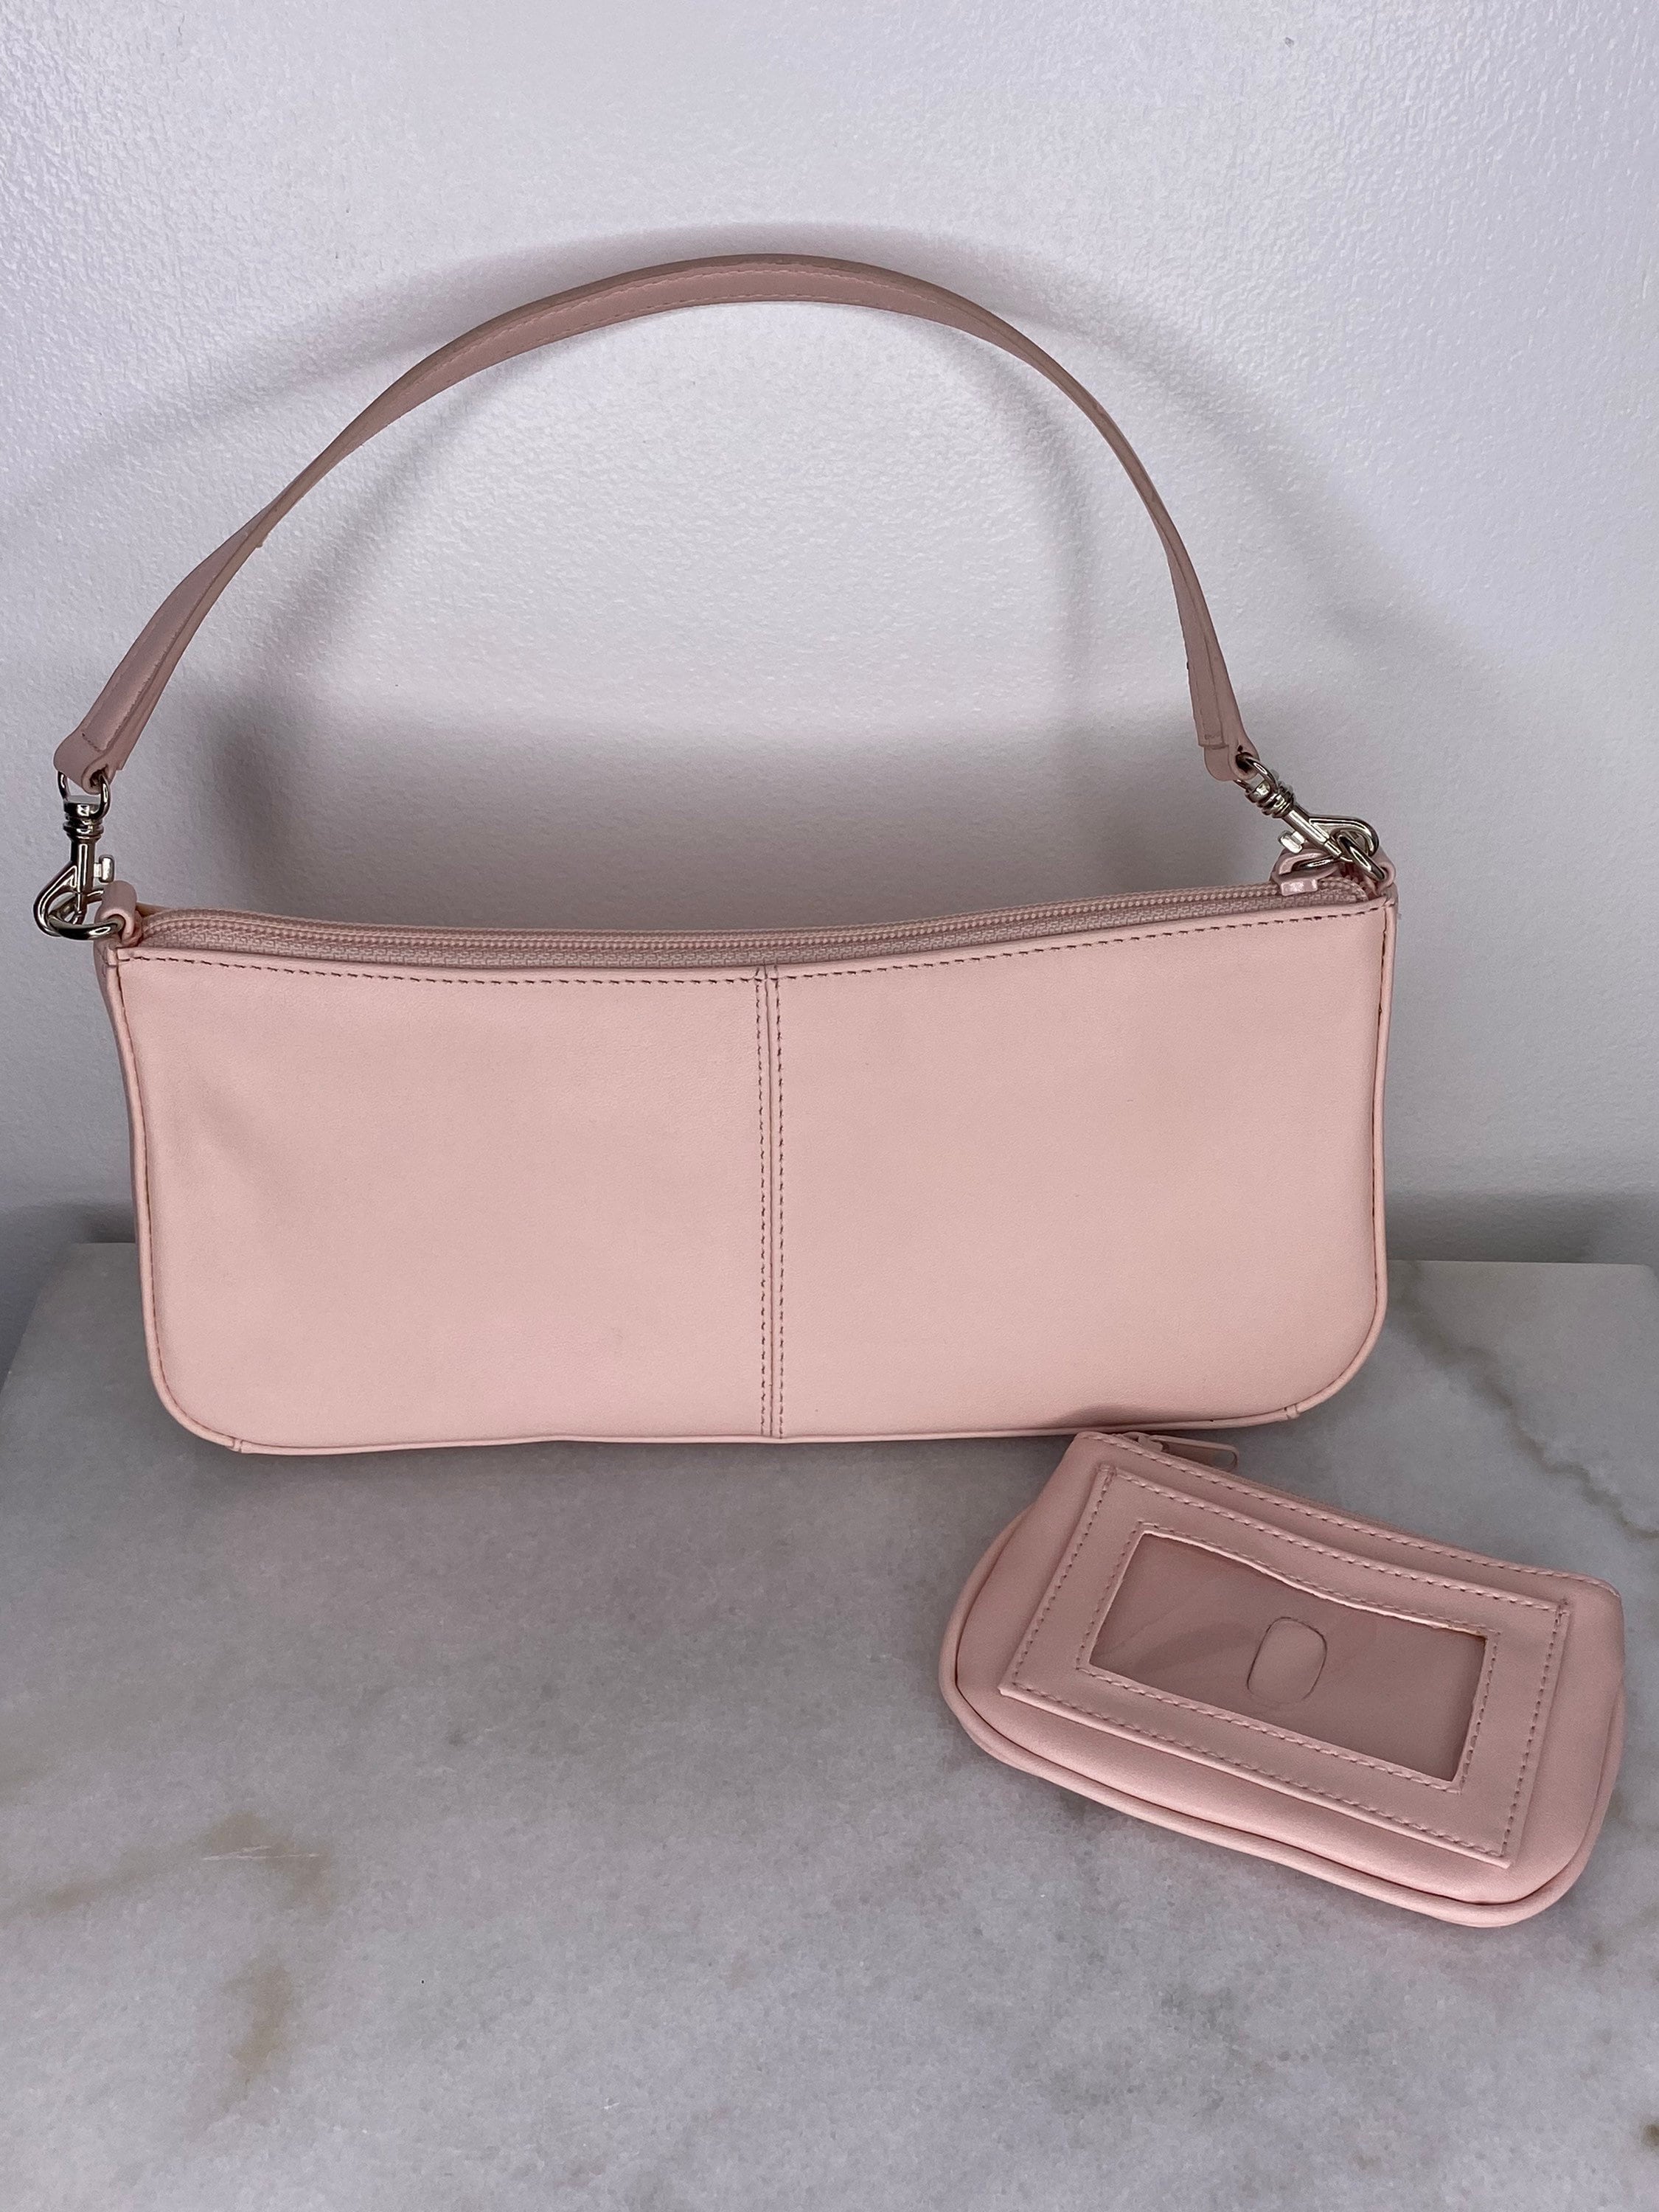 Vintage Giani Bernini Soft Pink Leather Purse With Matching 